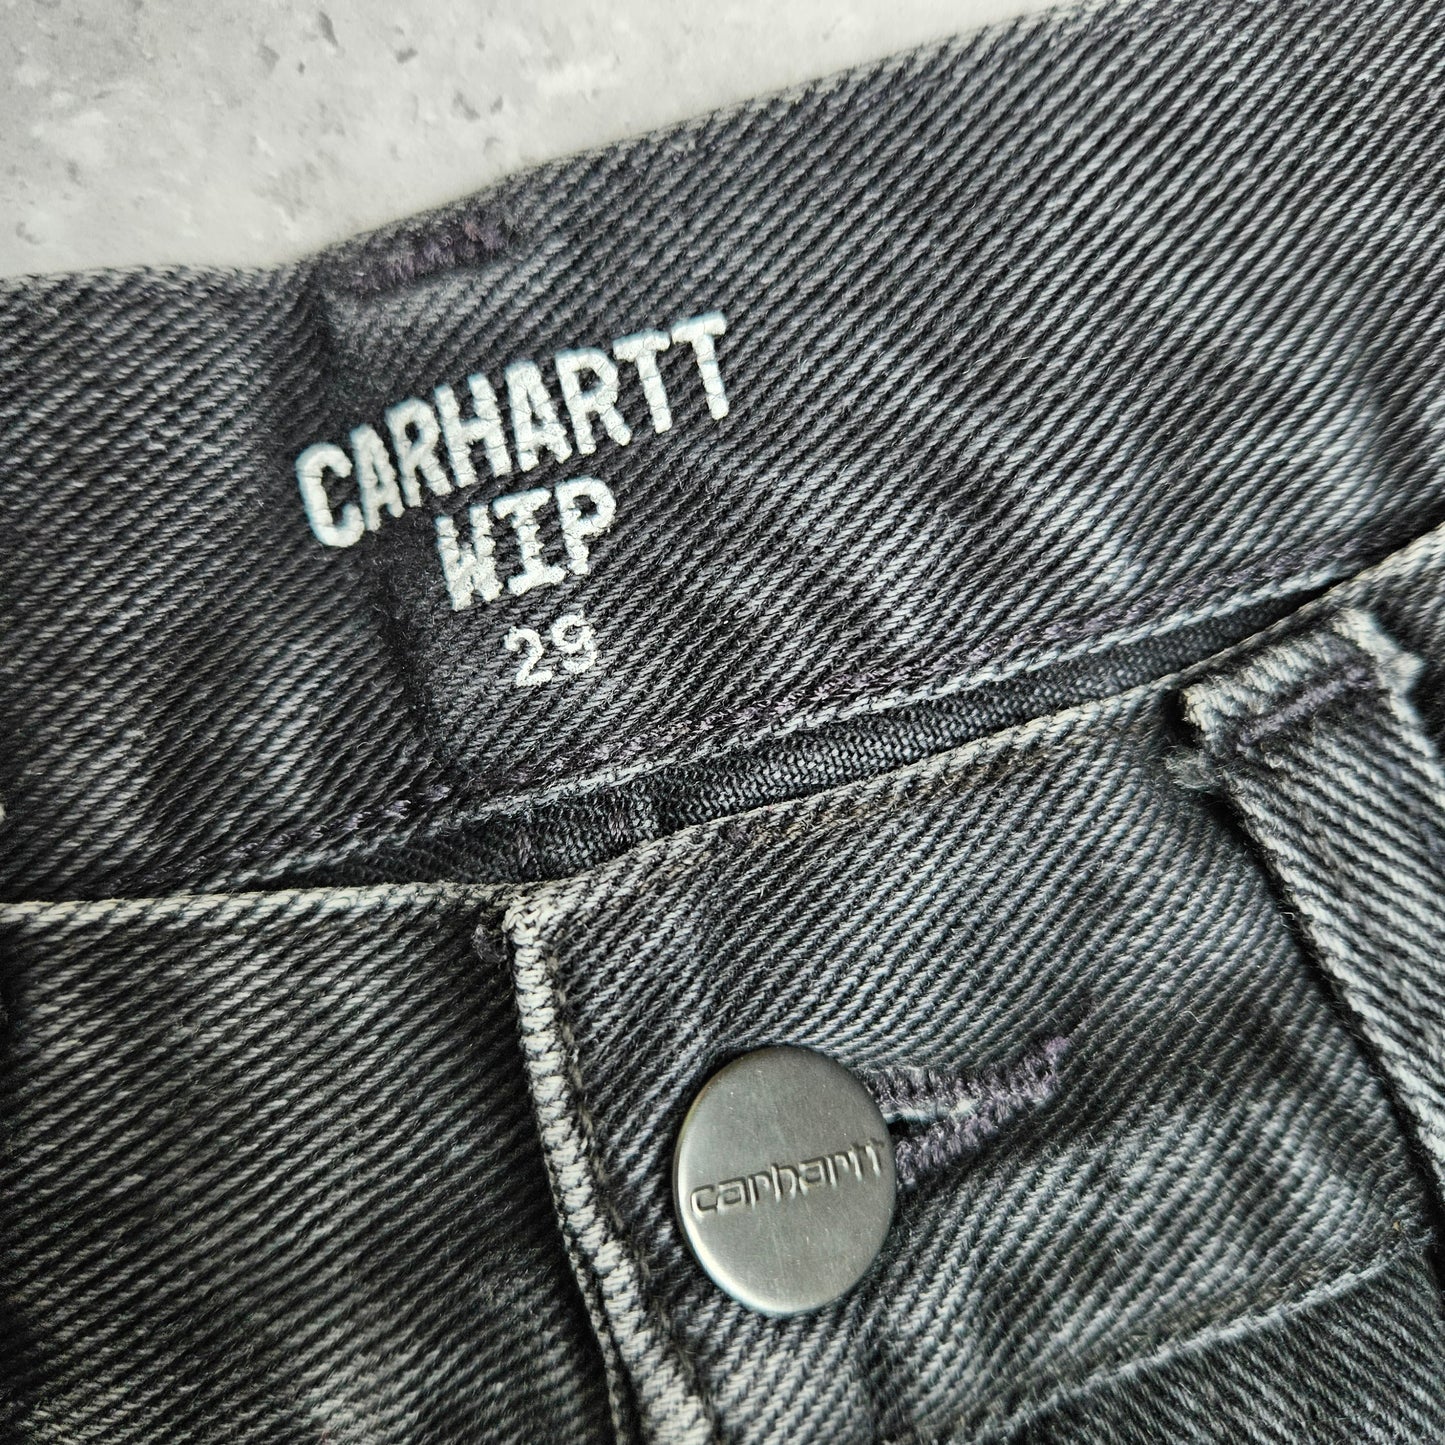 Carhartt Wip Black Denim Jeans (29)